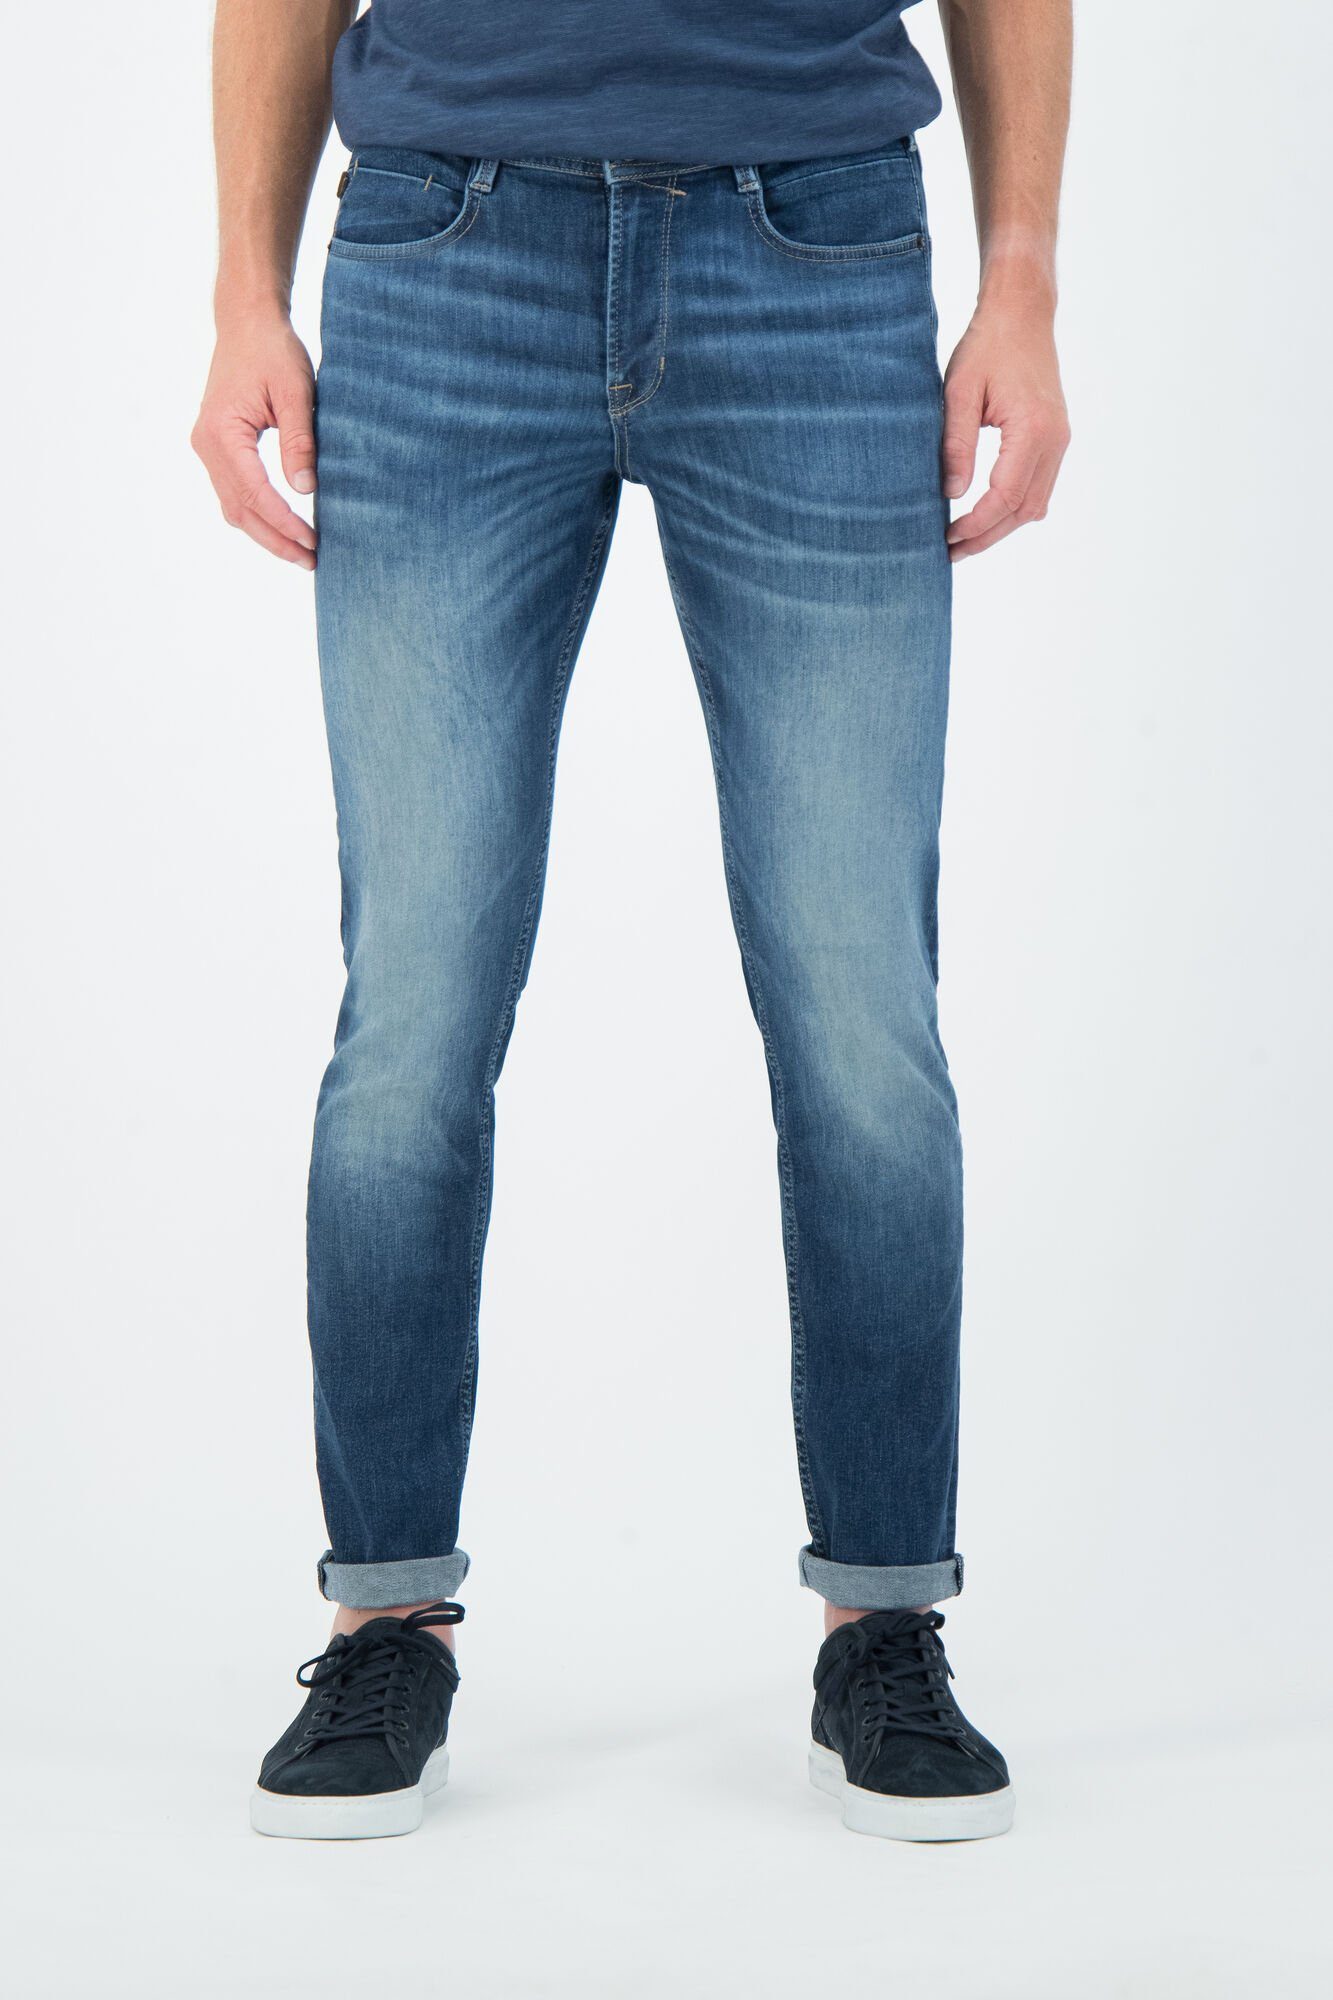 GARCIA JEANS 5-Pocket-Jeans GARCIA ROCKO dark blue medium used 690.8660 - | Stretchjeans